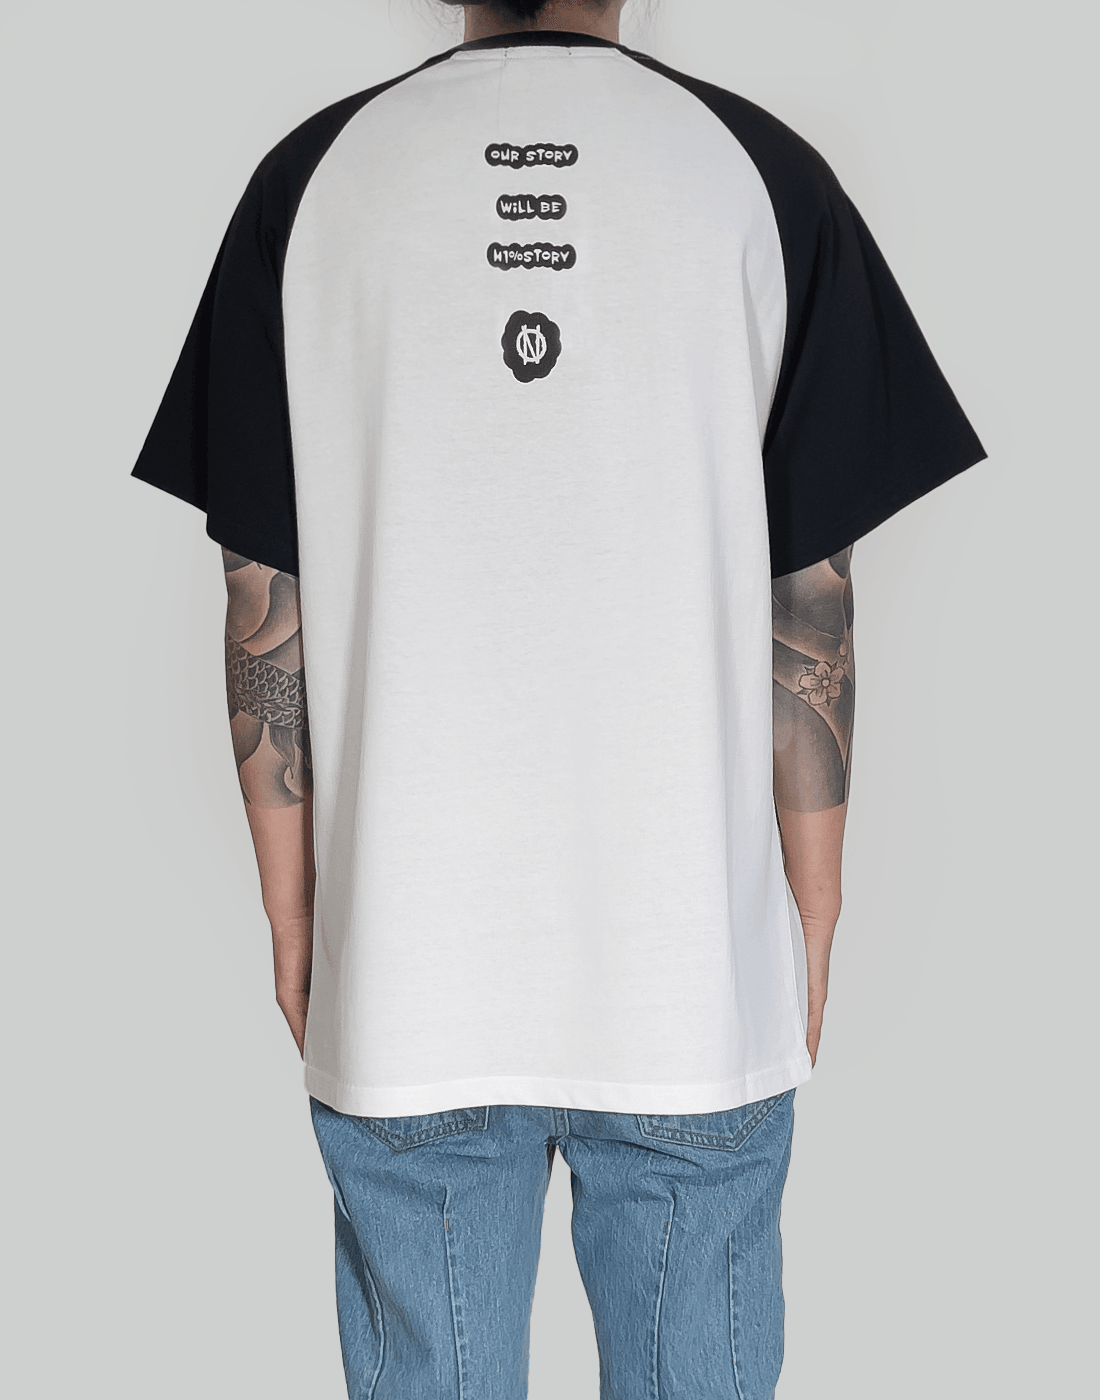 99%IS- Spiral Skull Raglan T-shirt (Hand Made Custom) - 082plus